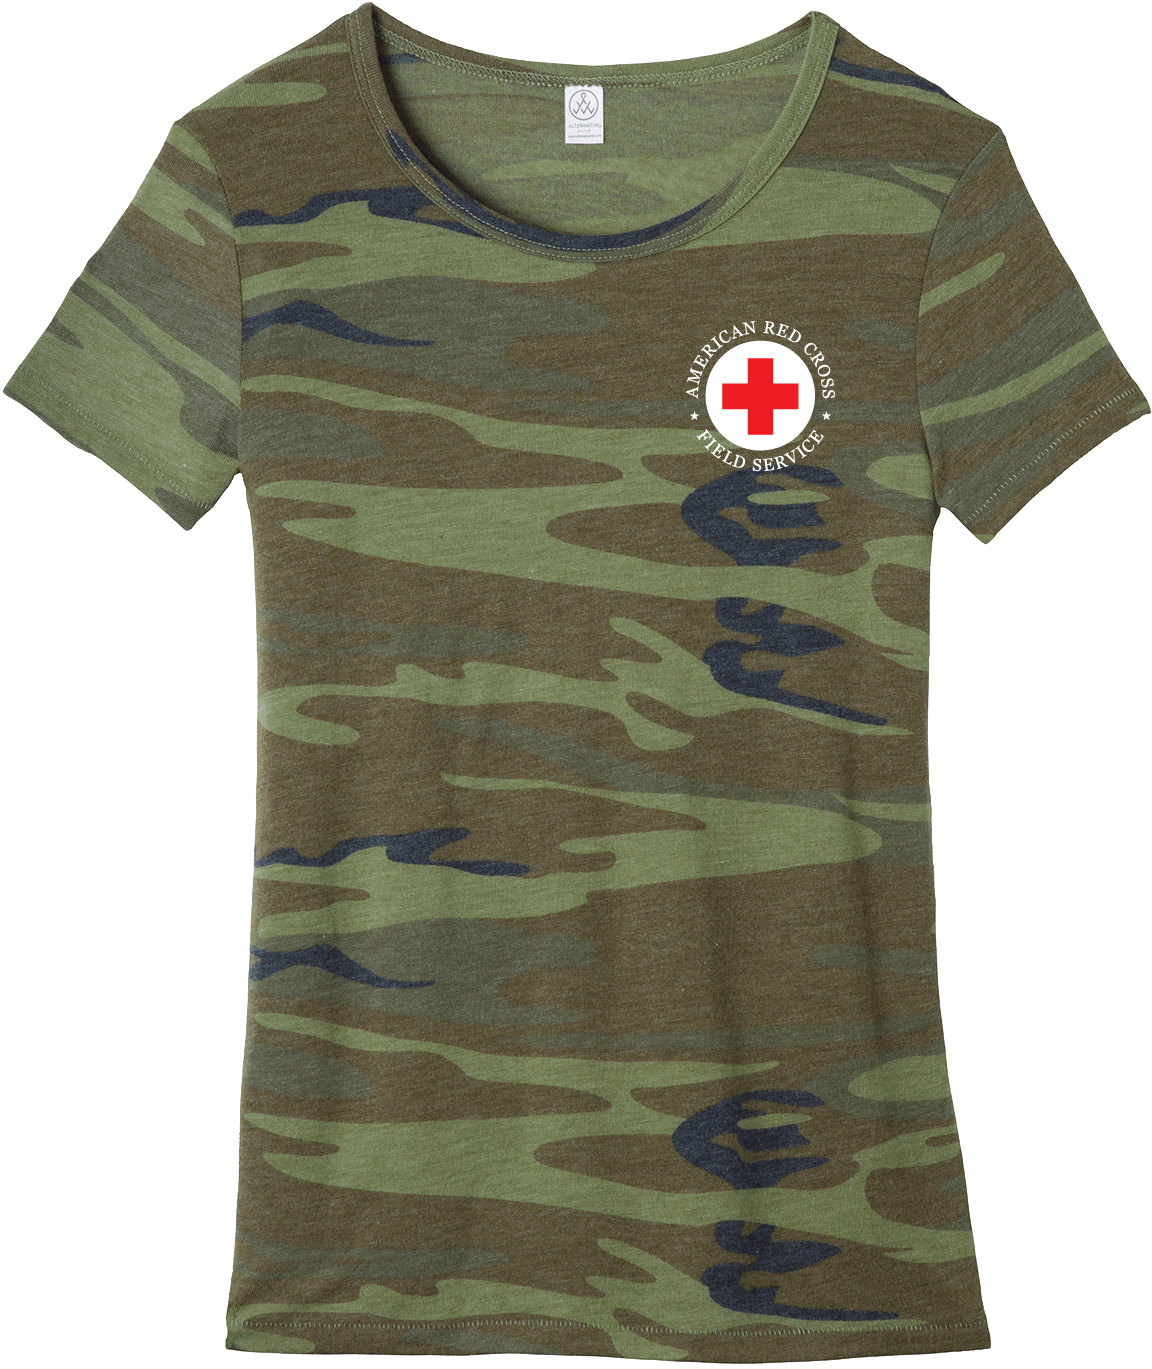 Camo Tshirt Red Cross Logo PNG image